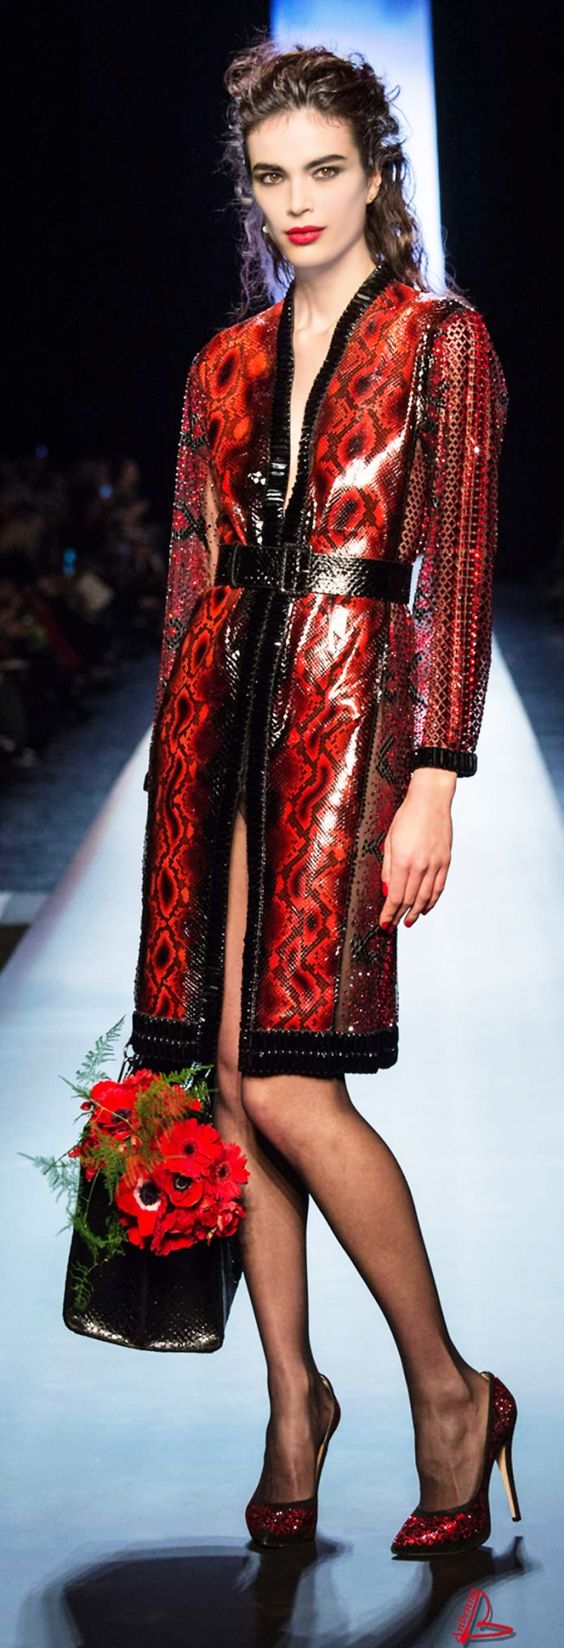 Black and red snakeskin dress